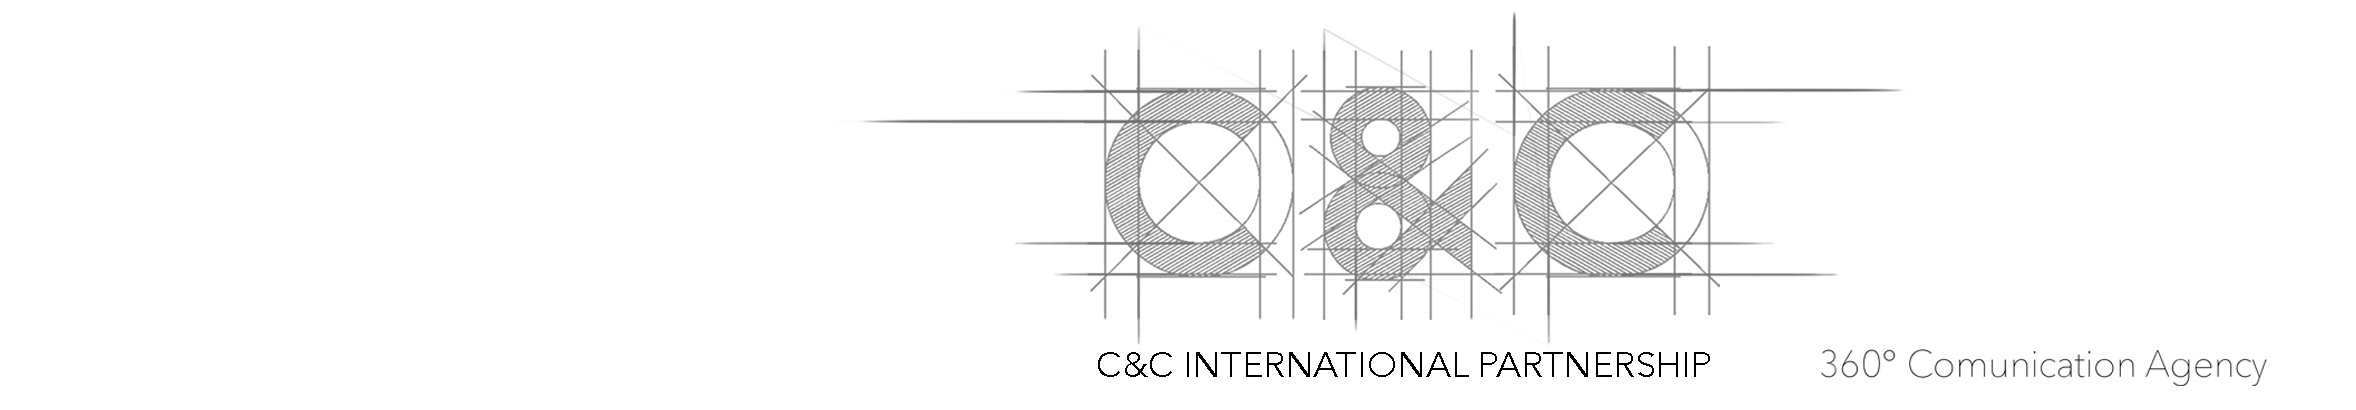 Cris for C&C International Partnership's profile banner